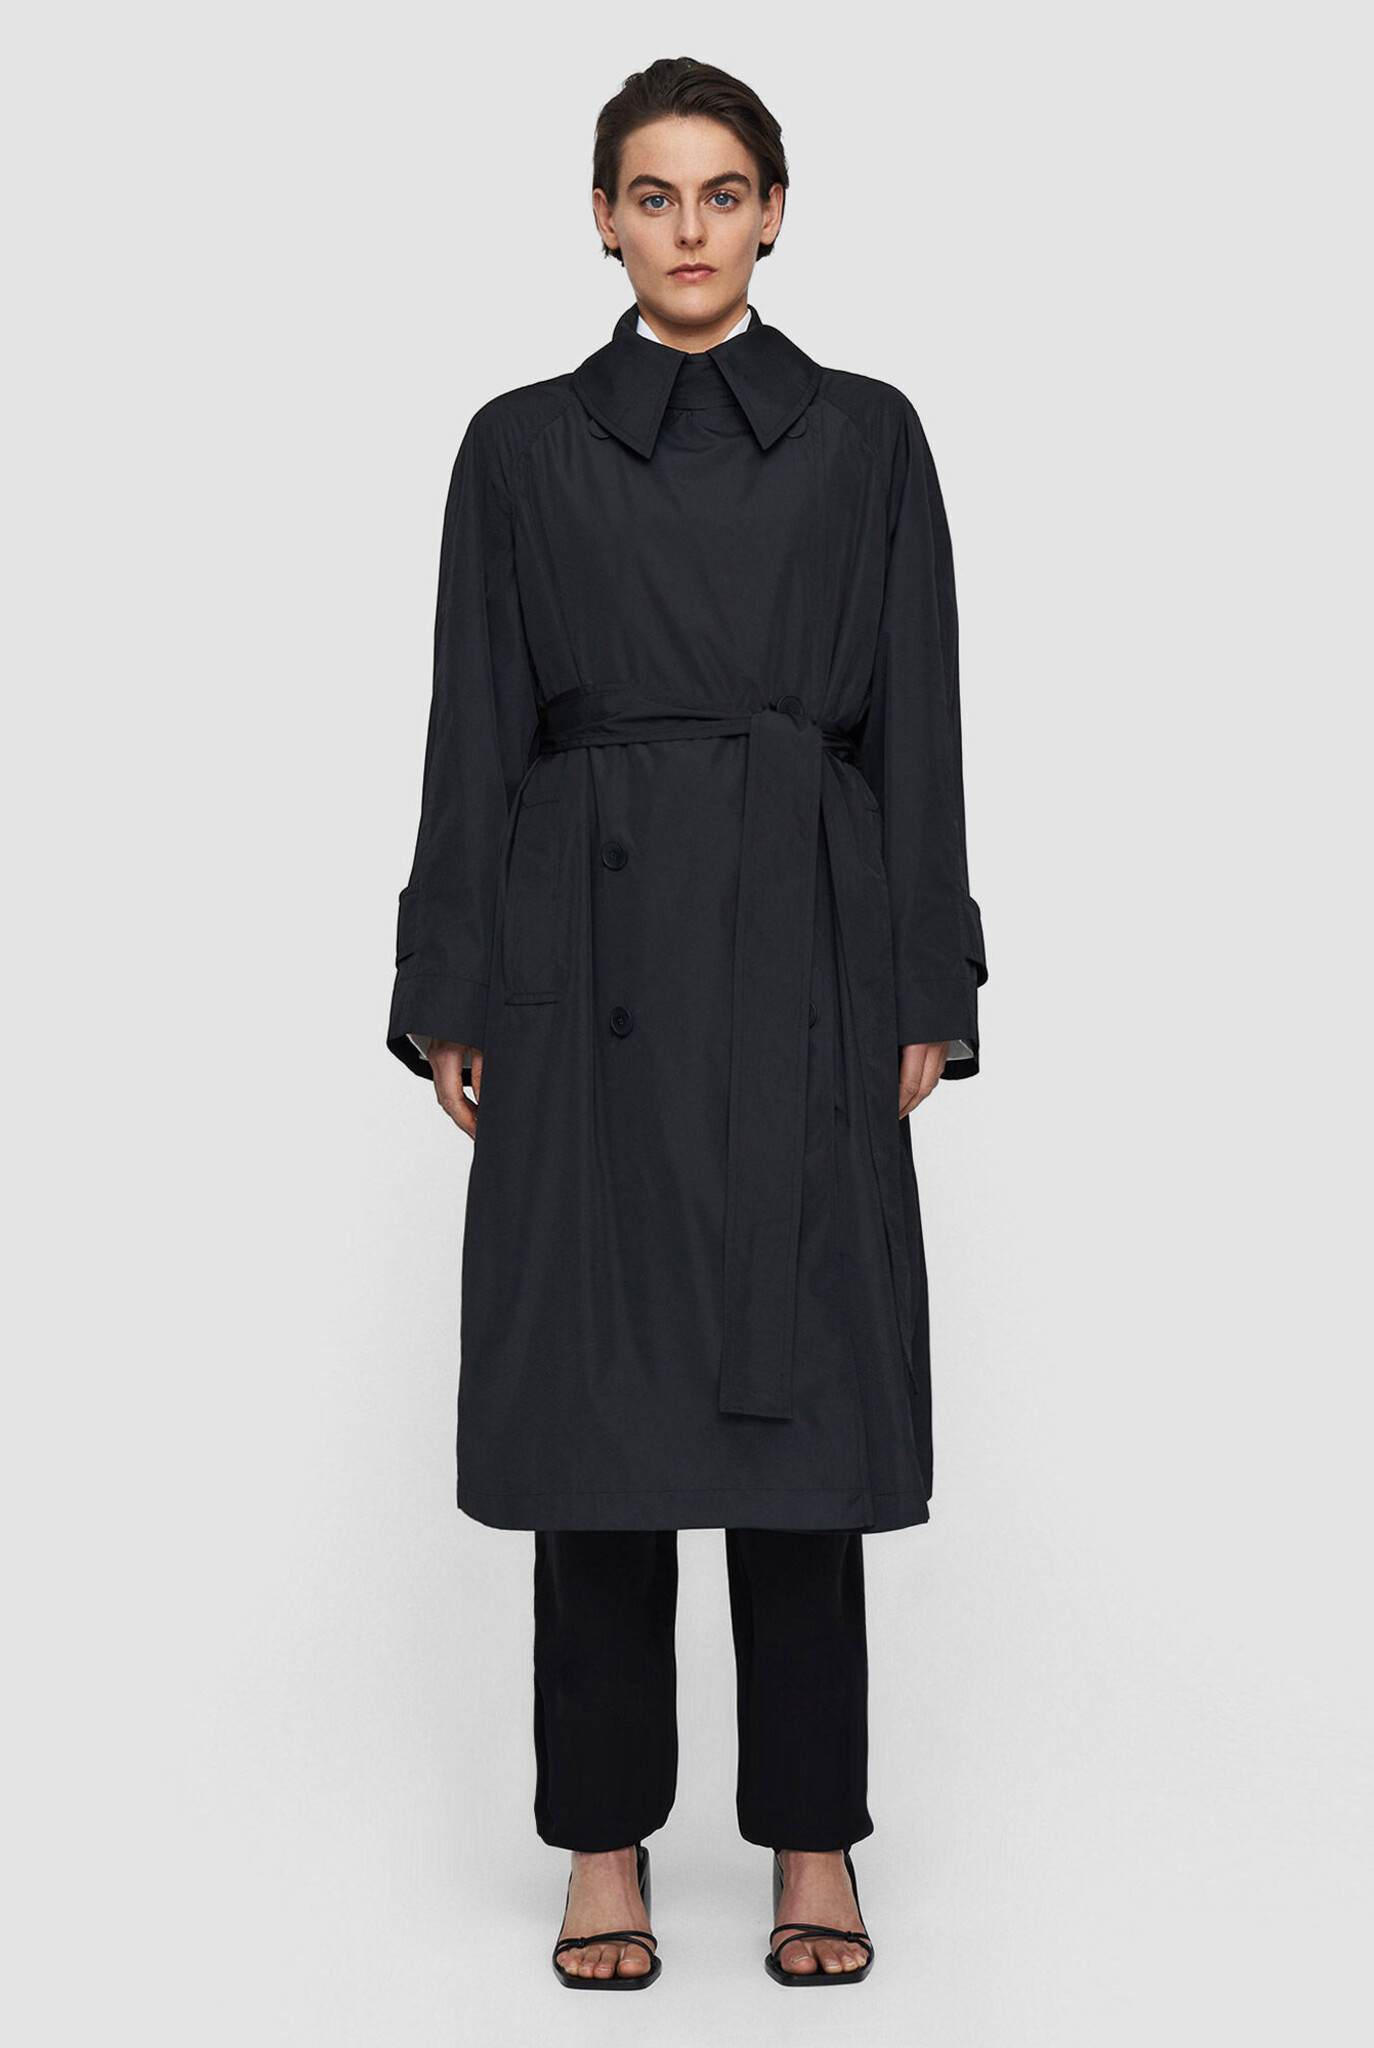 Chatsworth coat rainwear Black